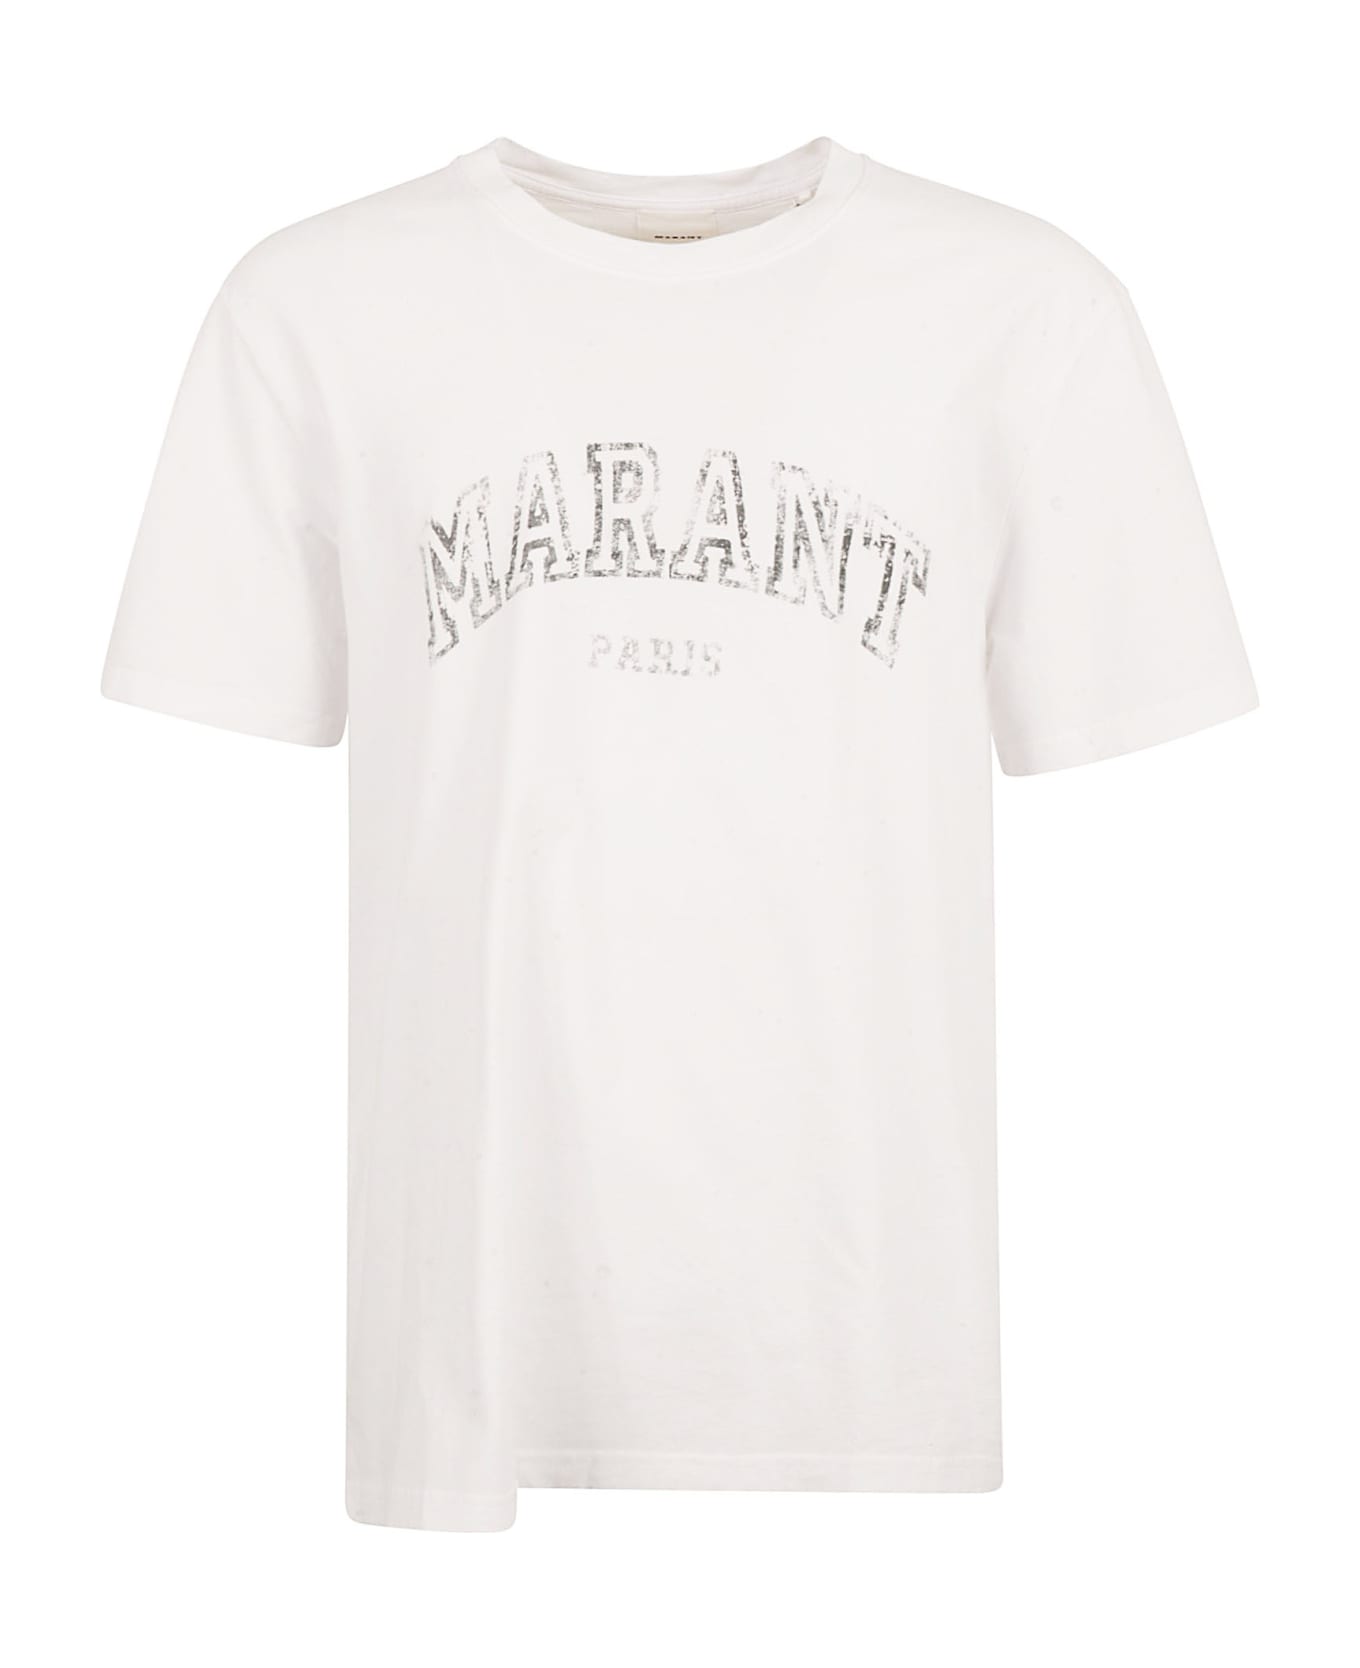 Isabel Marant Honore T-shirt - White